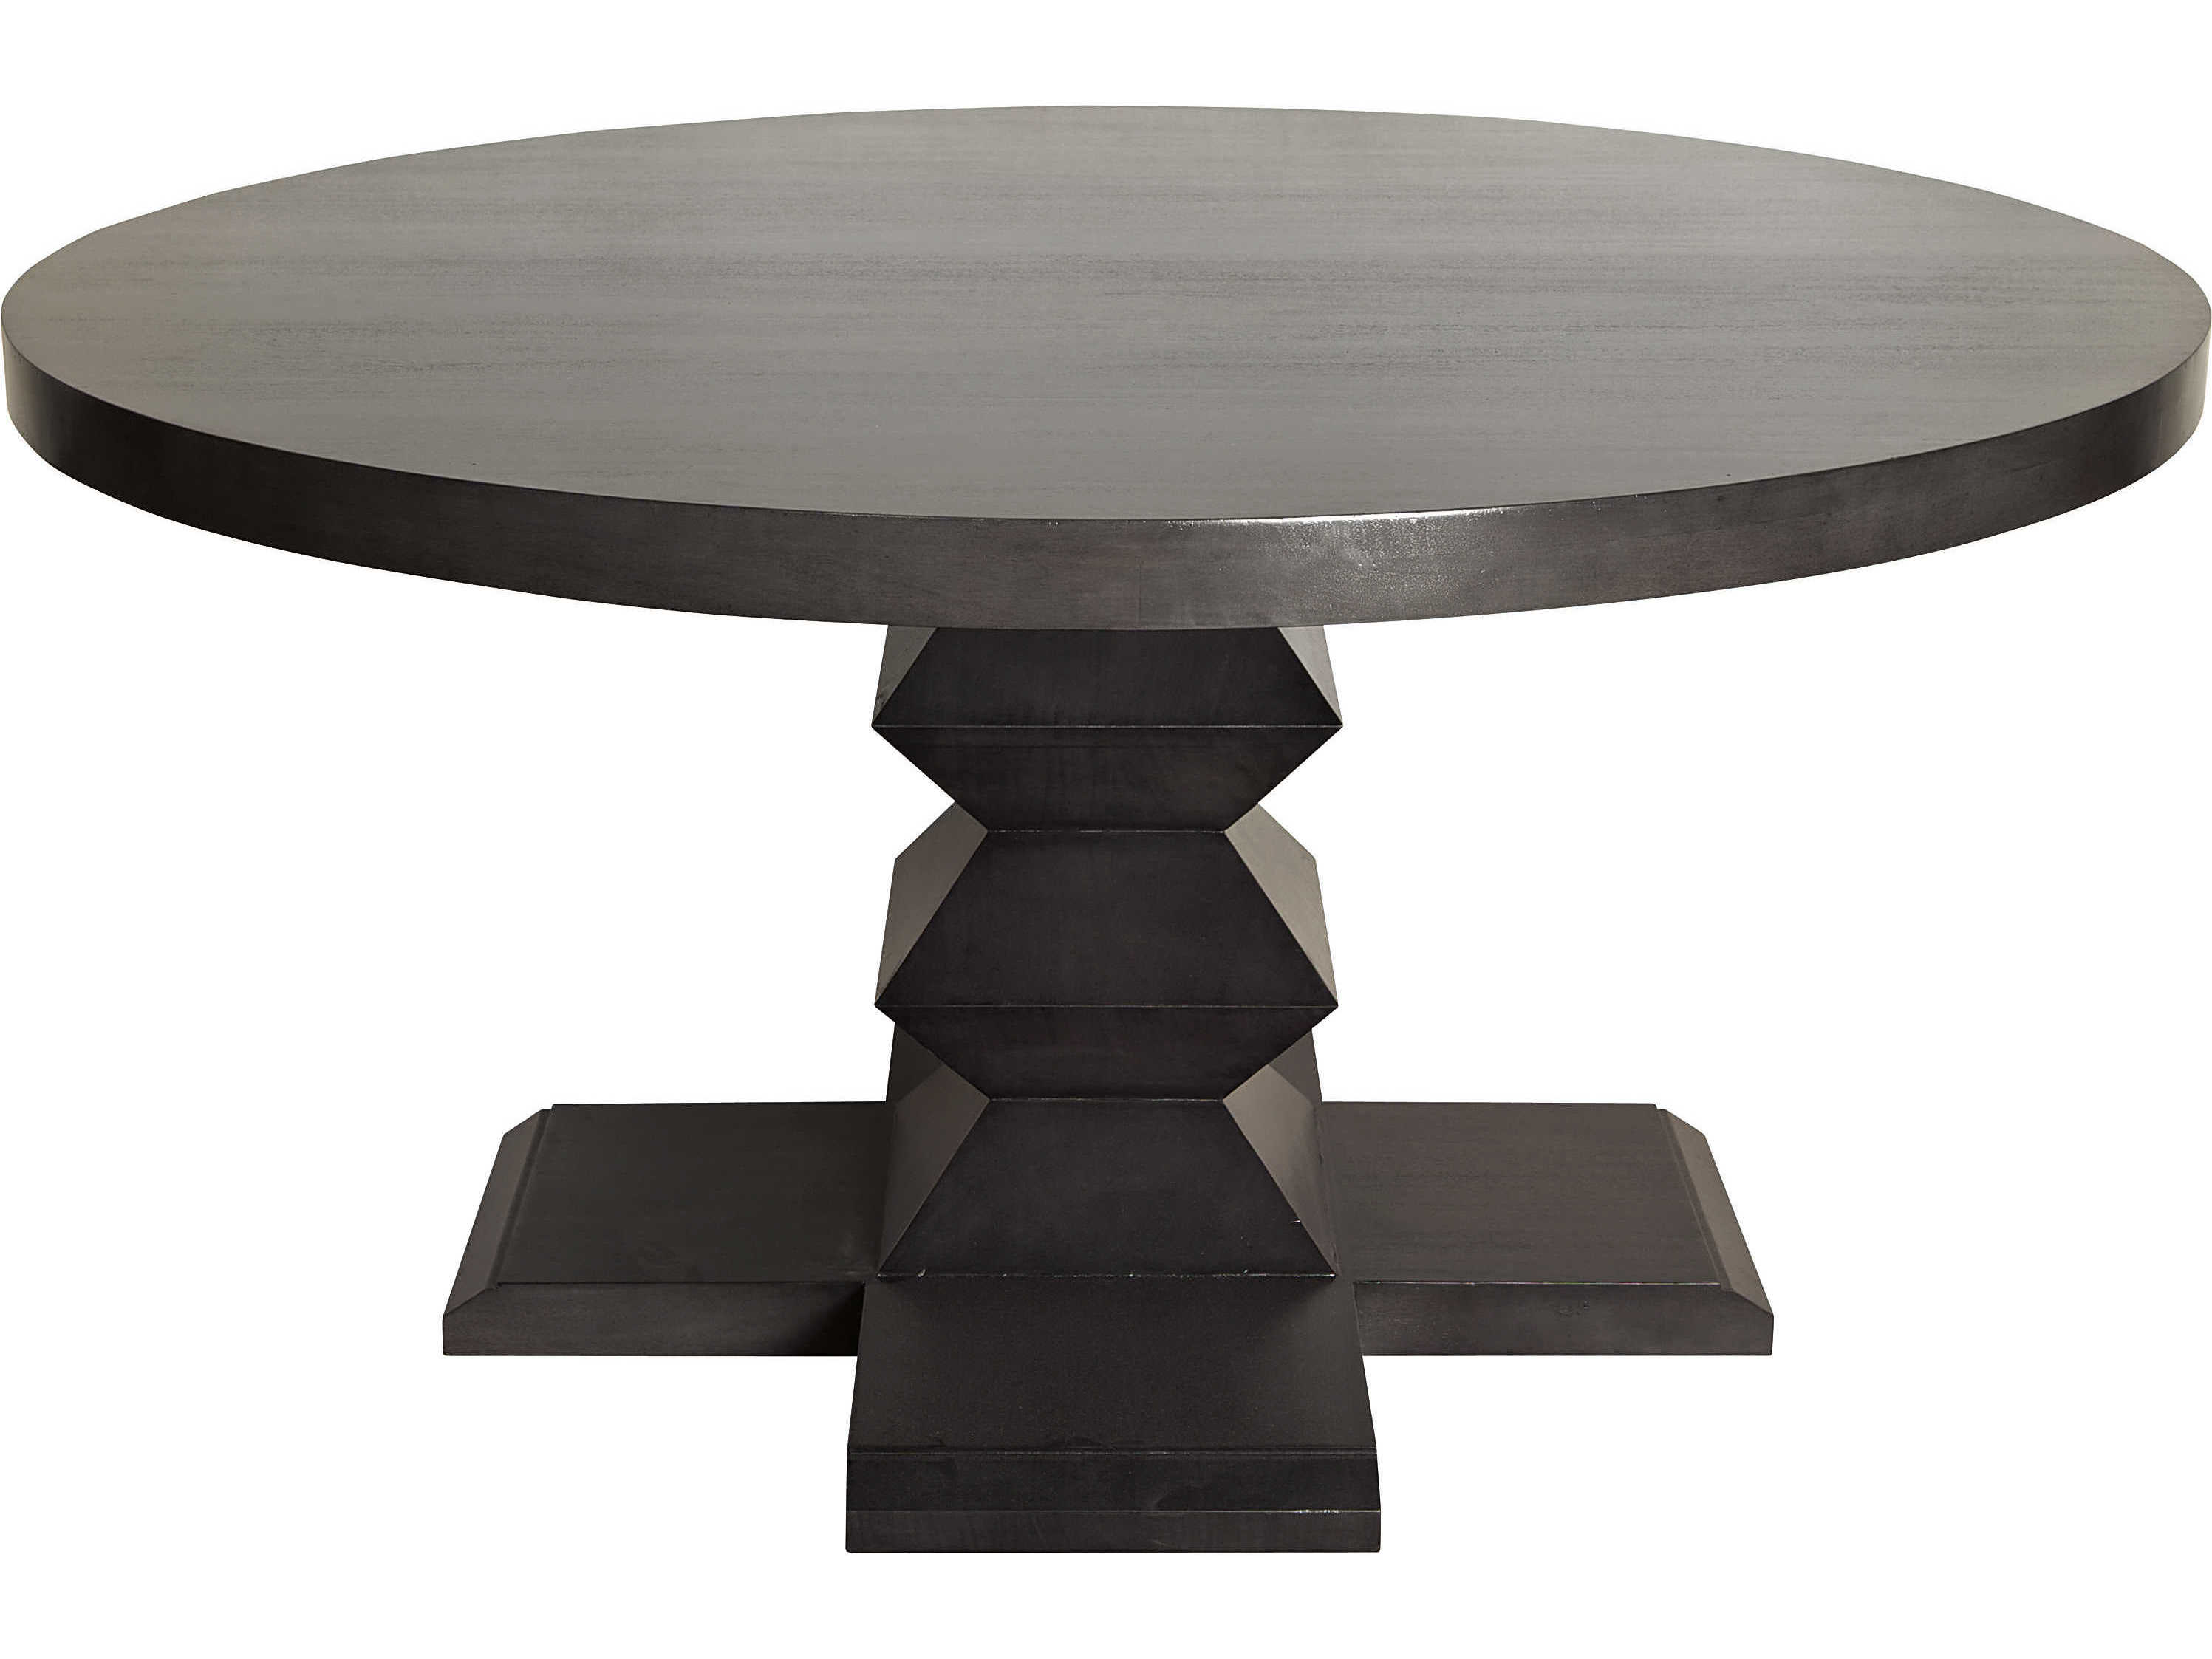 Обеденный стол Zig-Zag 240 Koza Home. Noir Table. Circle Table. 108-112 Стол Эдинбург, 60*60*39см дерево. Round 60